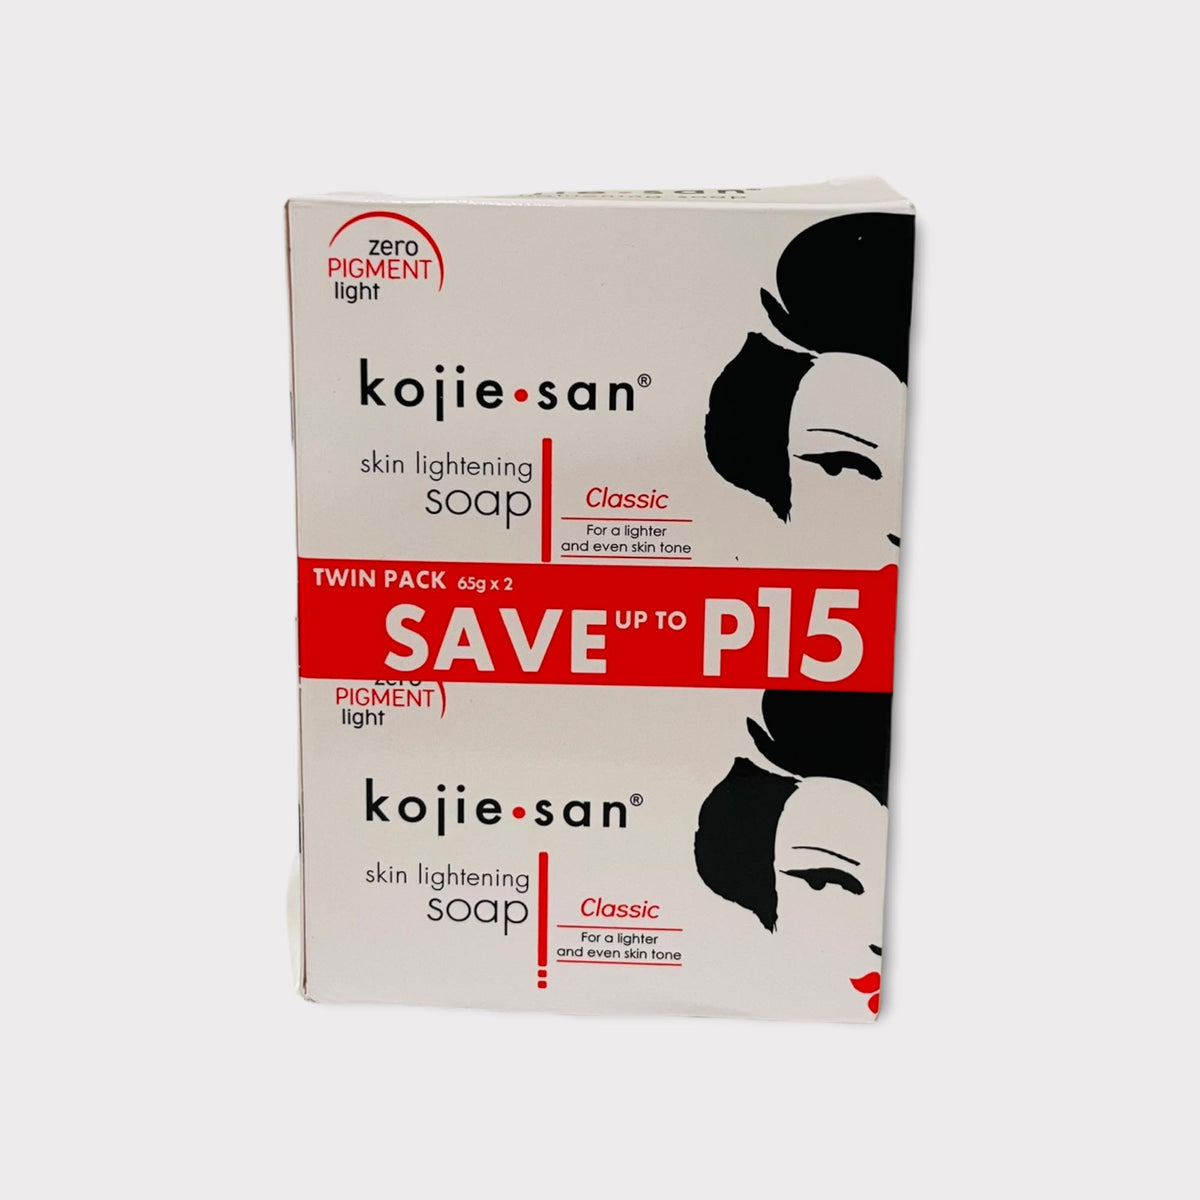 Kojie San Skin Brightening Soap – The Original Kojic Acid Soap that Reduces  Dark Spots, Hyper-pigmentation, & other types of skin damage – 65g x 4